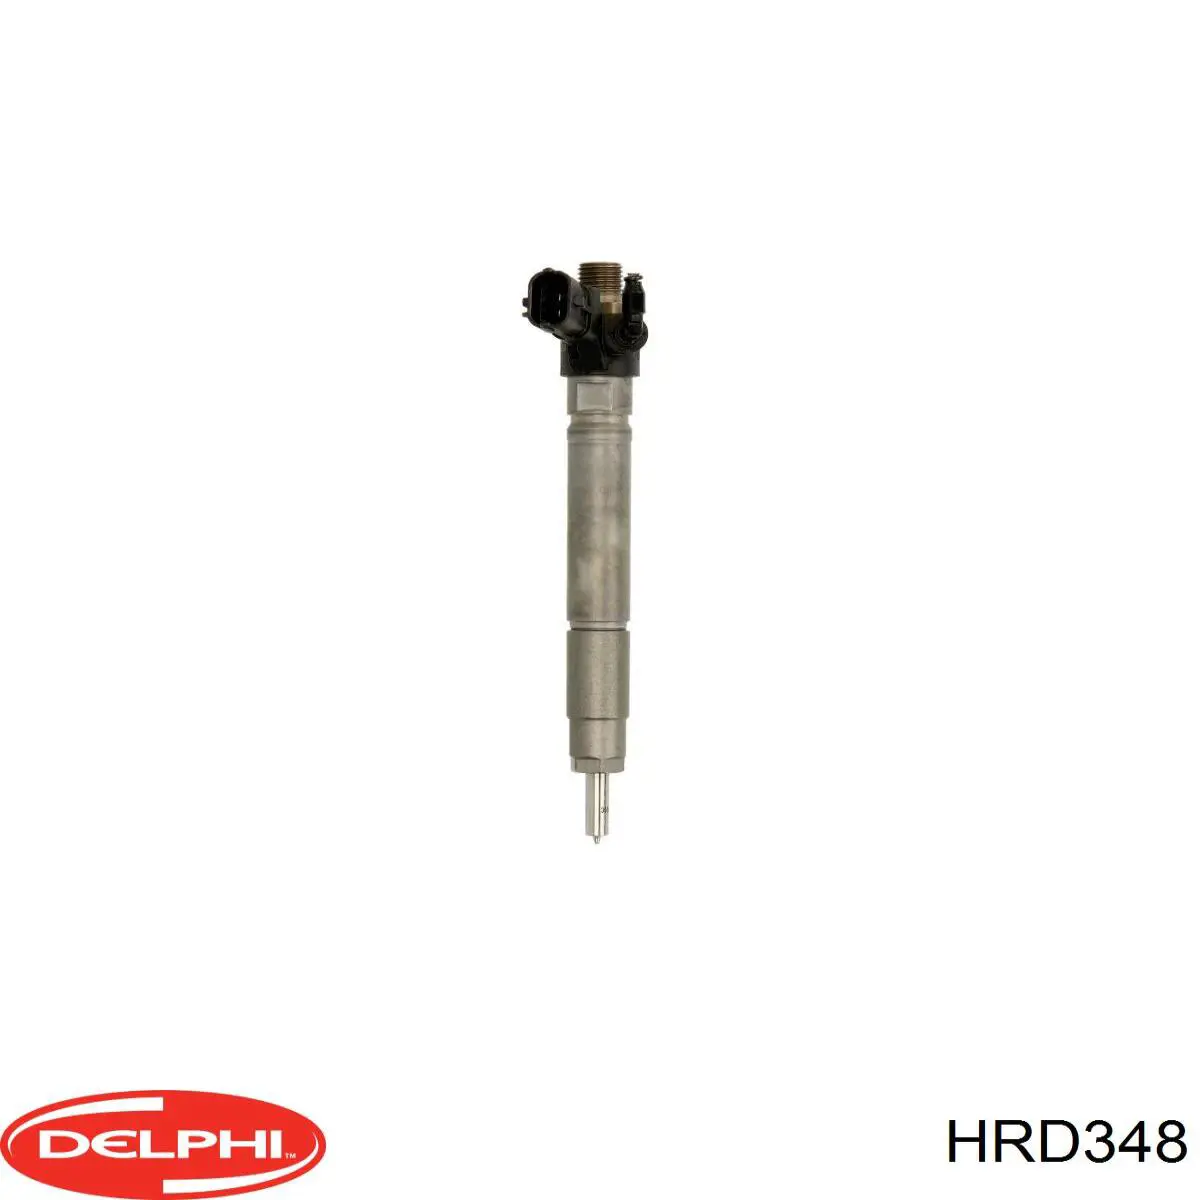 HRD348 Delphi injetor de injeção de combustível